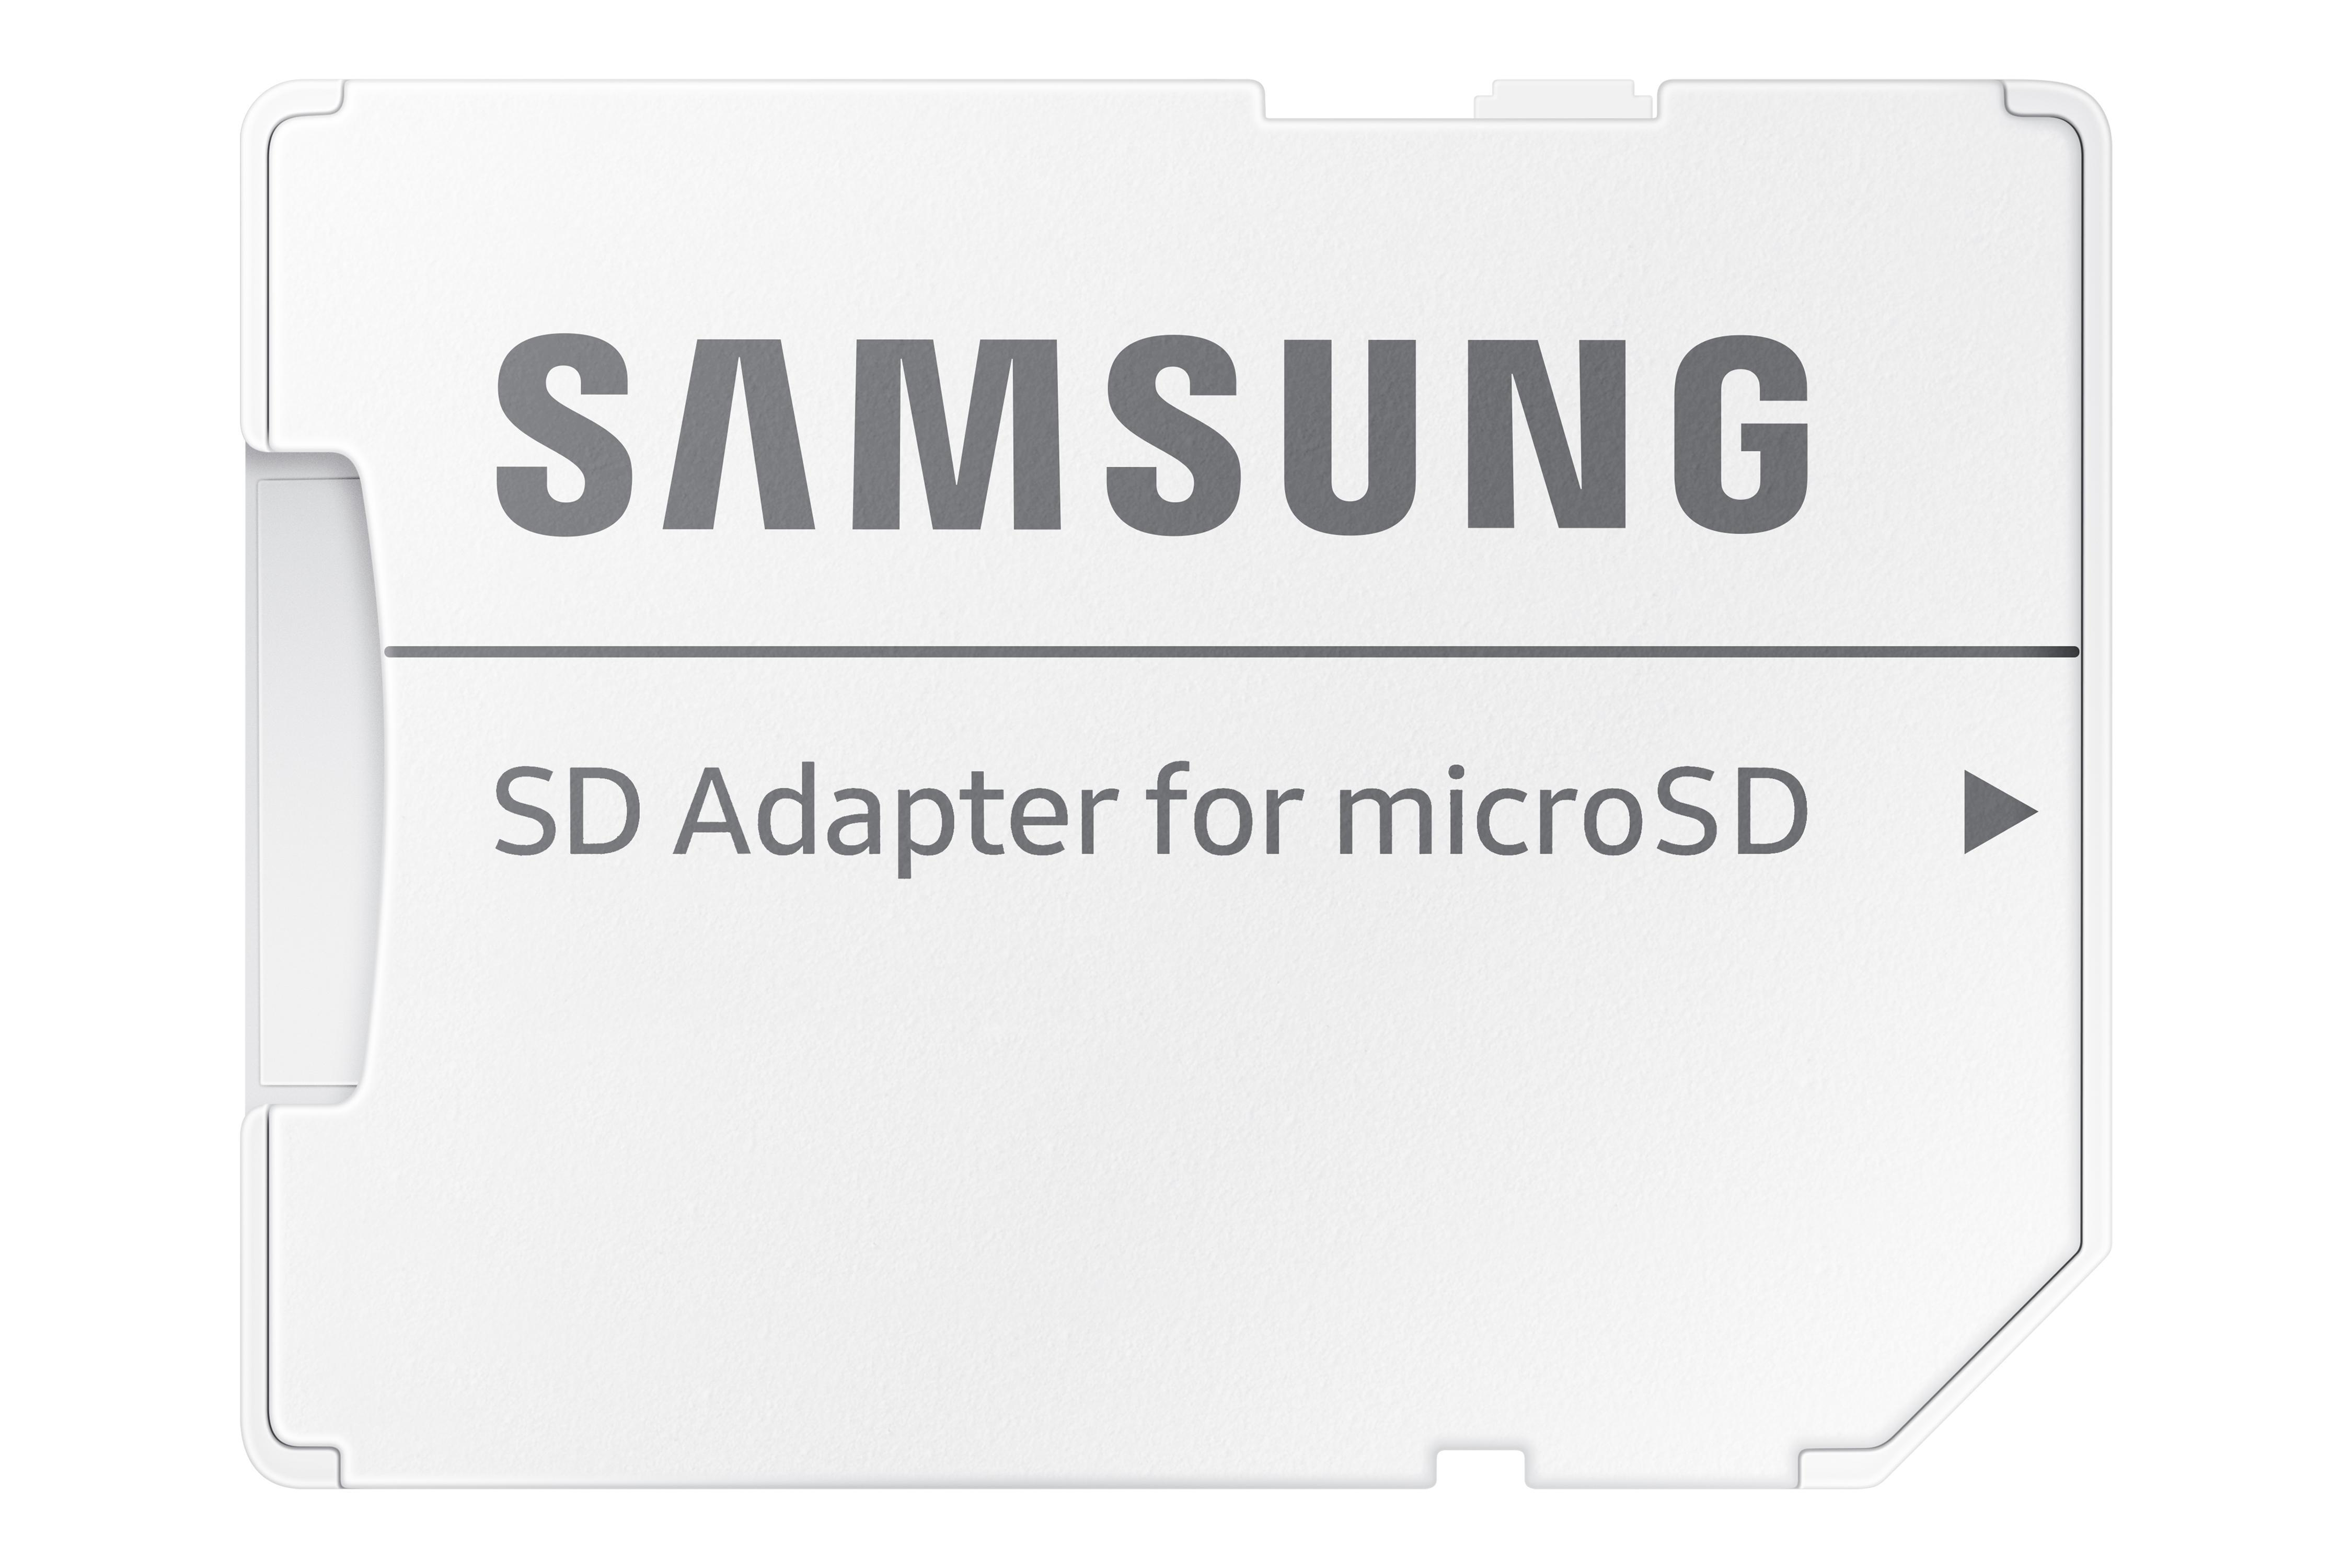 Micro-SDXC Endurance 256 Speicherkarte, SAMSUNG MB/s GB, (2022), PRO 100